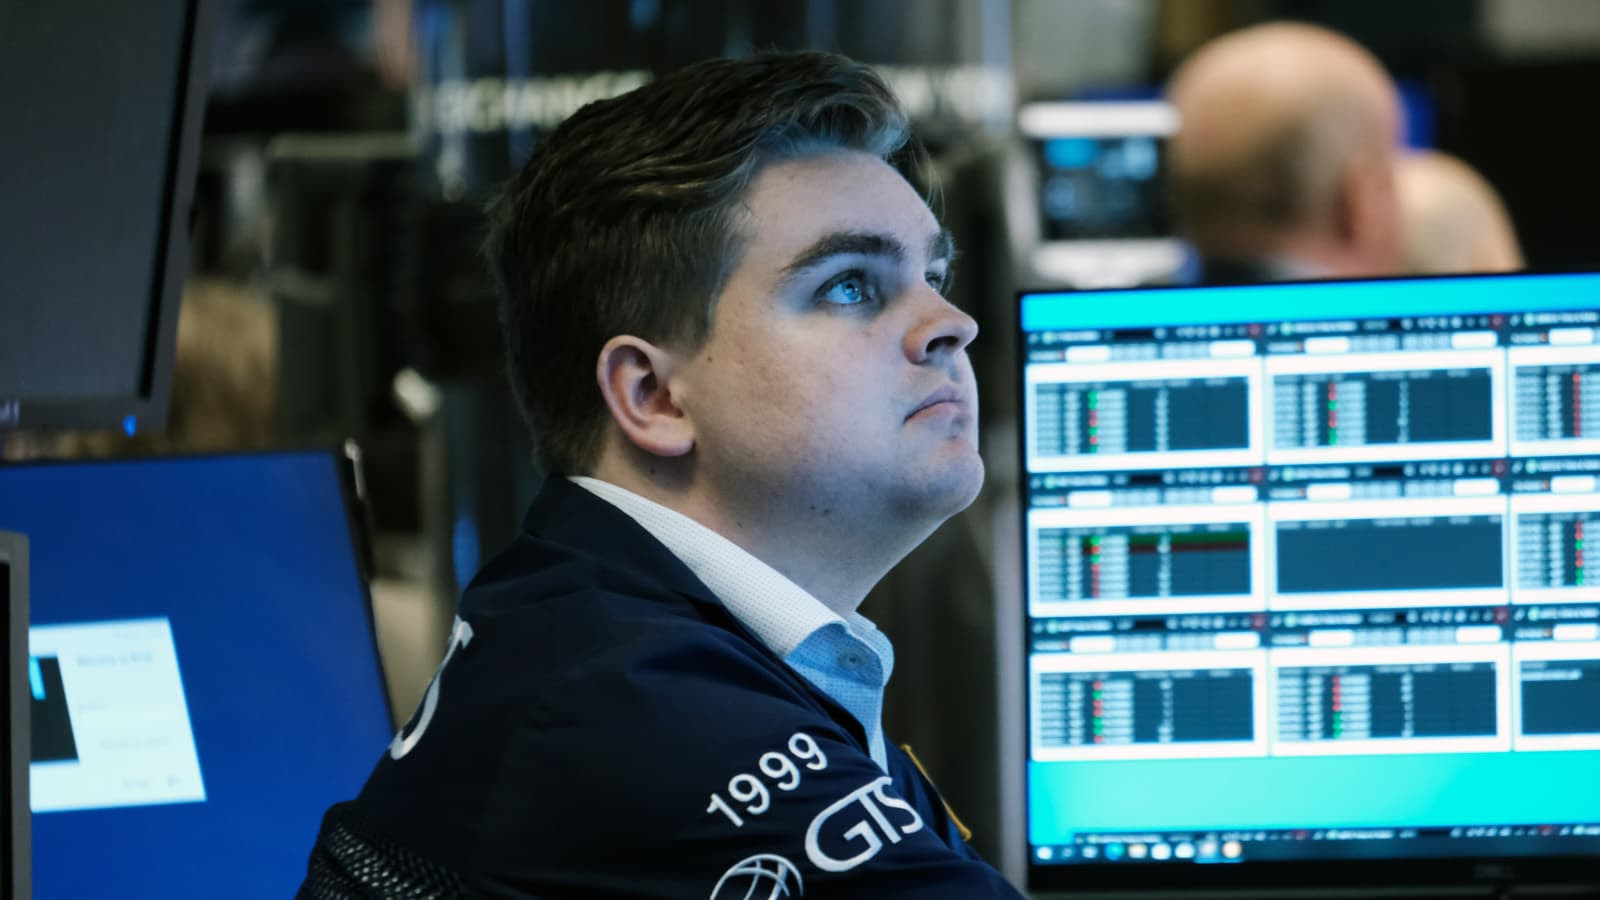 Stock futures fall slightly as Wall Street looks to snap losing streak